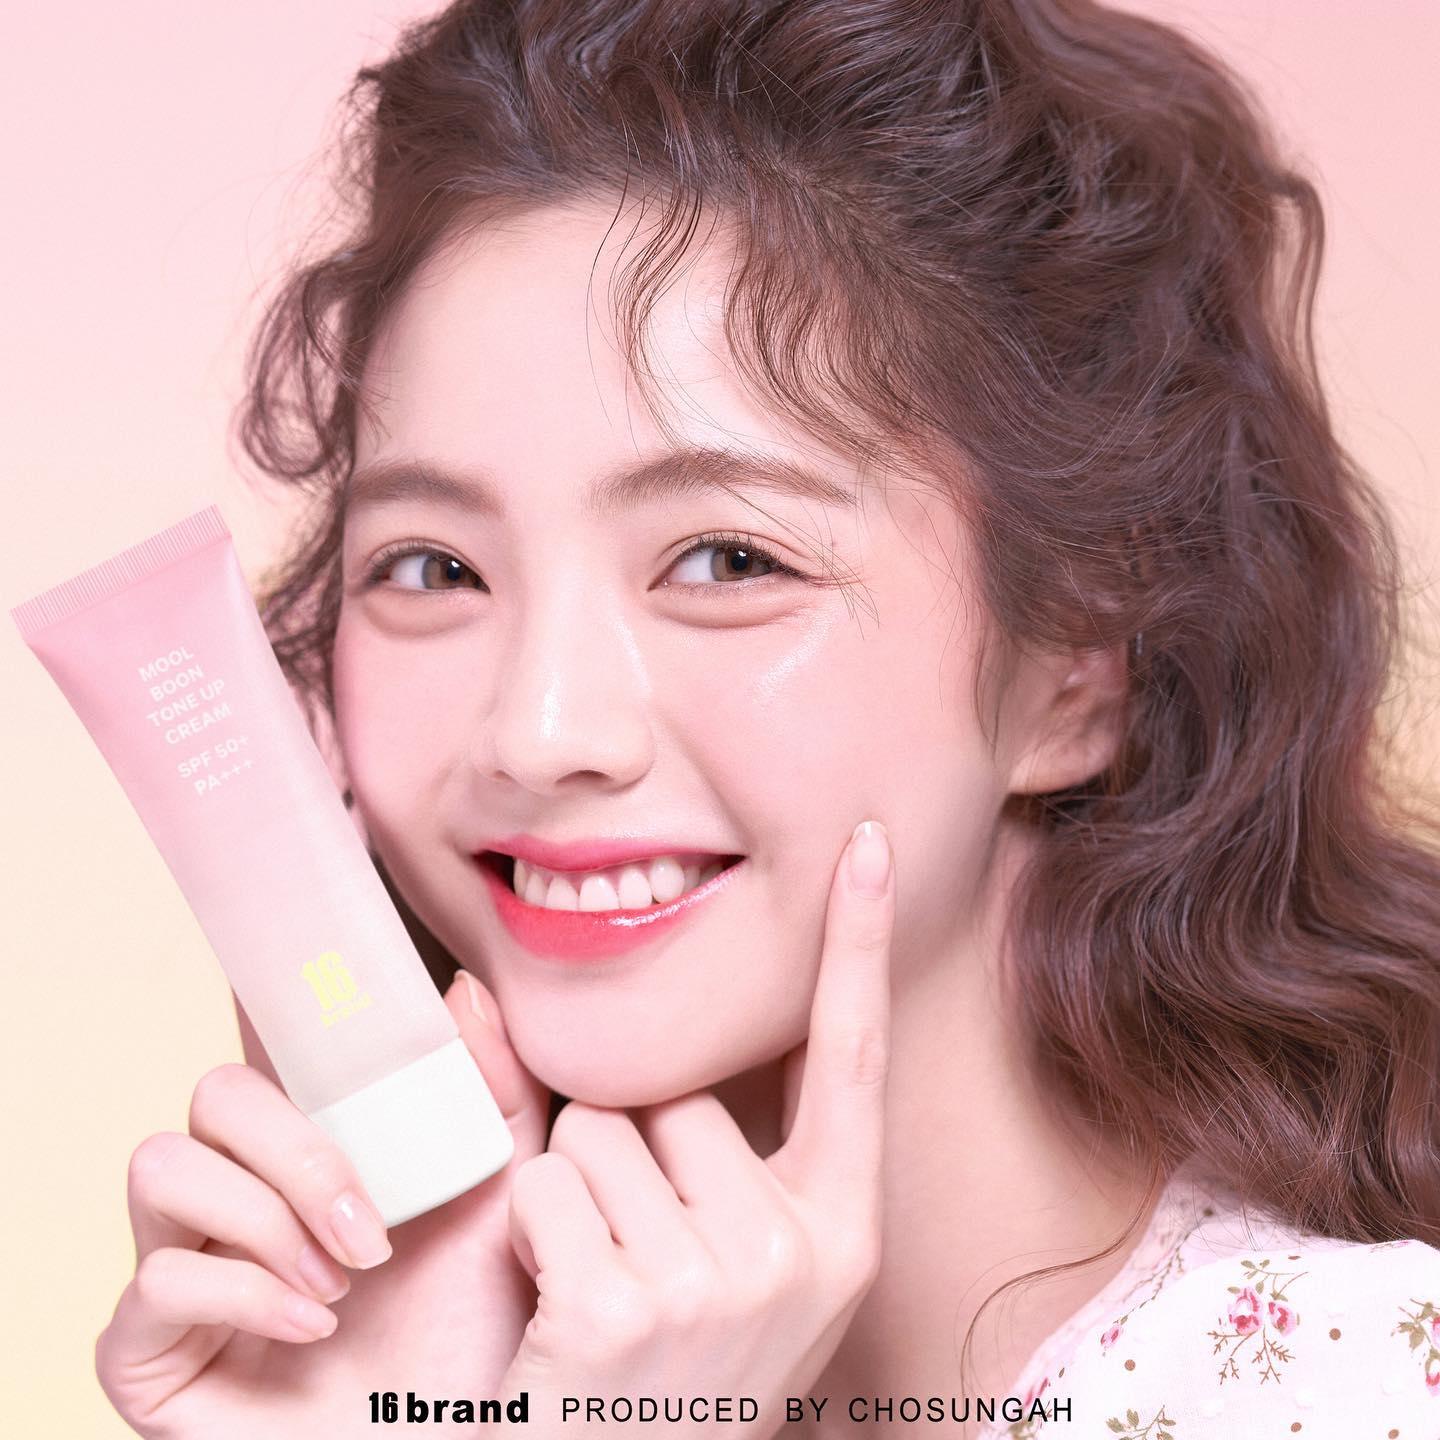 Kem Nền 16 Brand Mool Boon Tone Up Cream - Kallos Vietnam